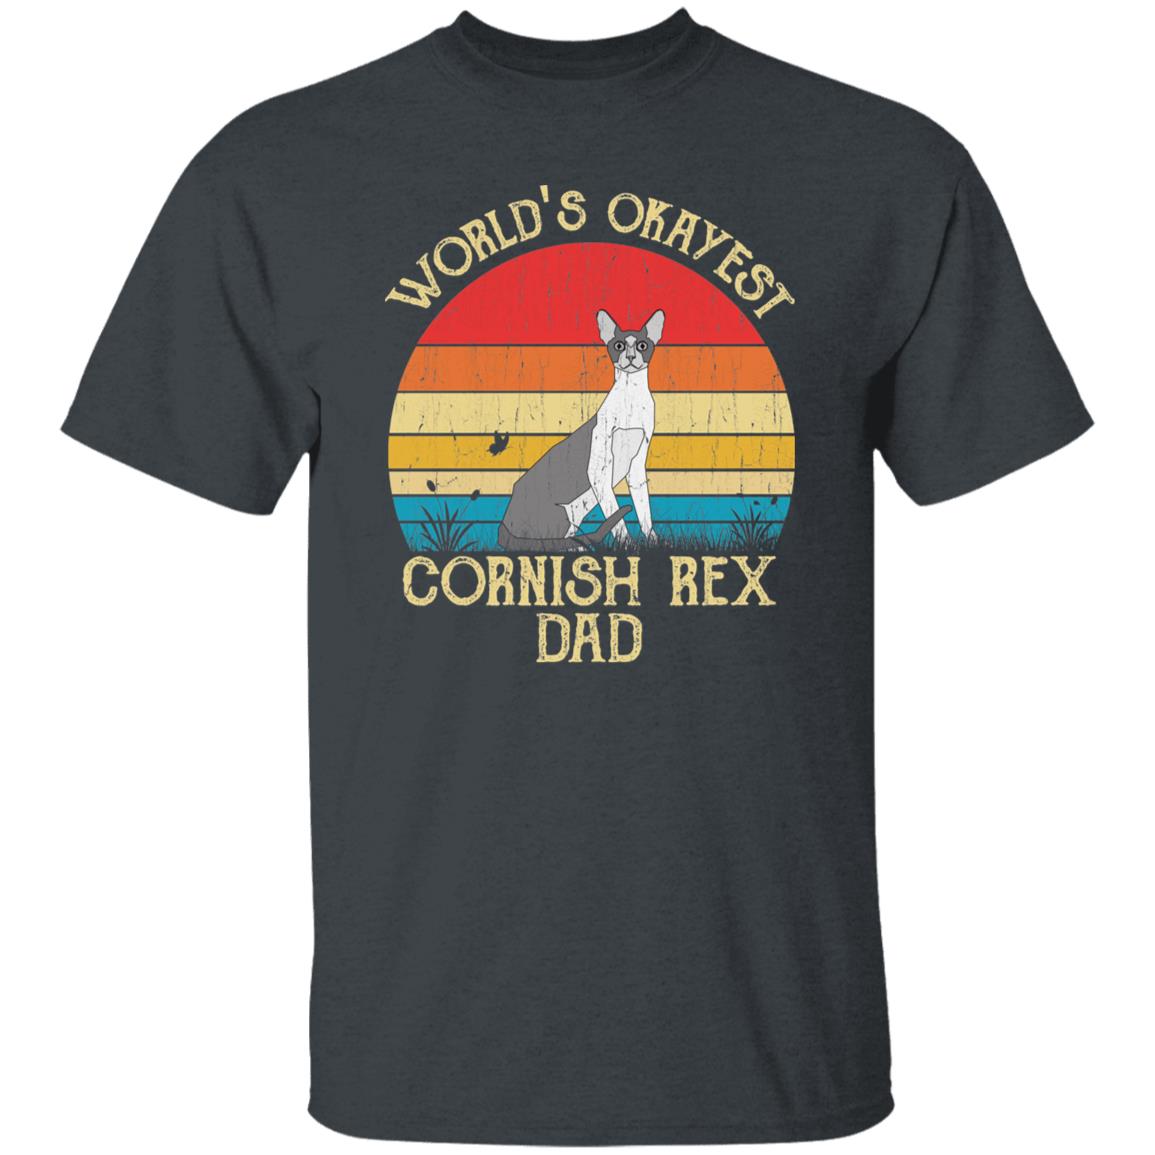 World's Okayest Cornish rex dad Retro Style Unisex T-shirt Black Navy Dark Heather-Dark Heather-Family-Gift-Planet